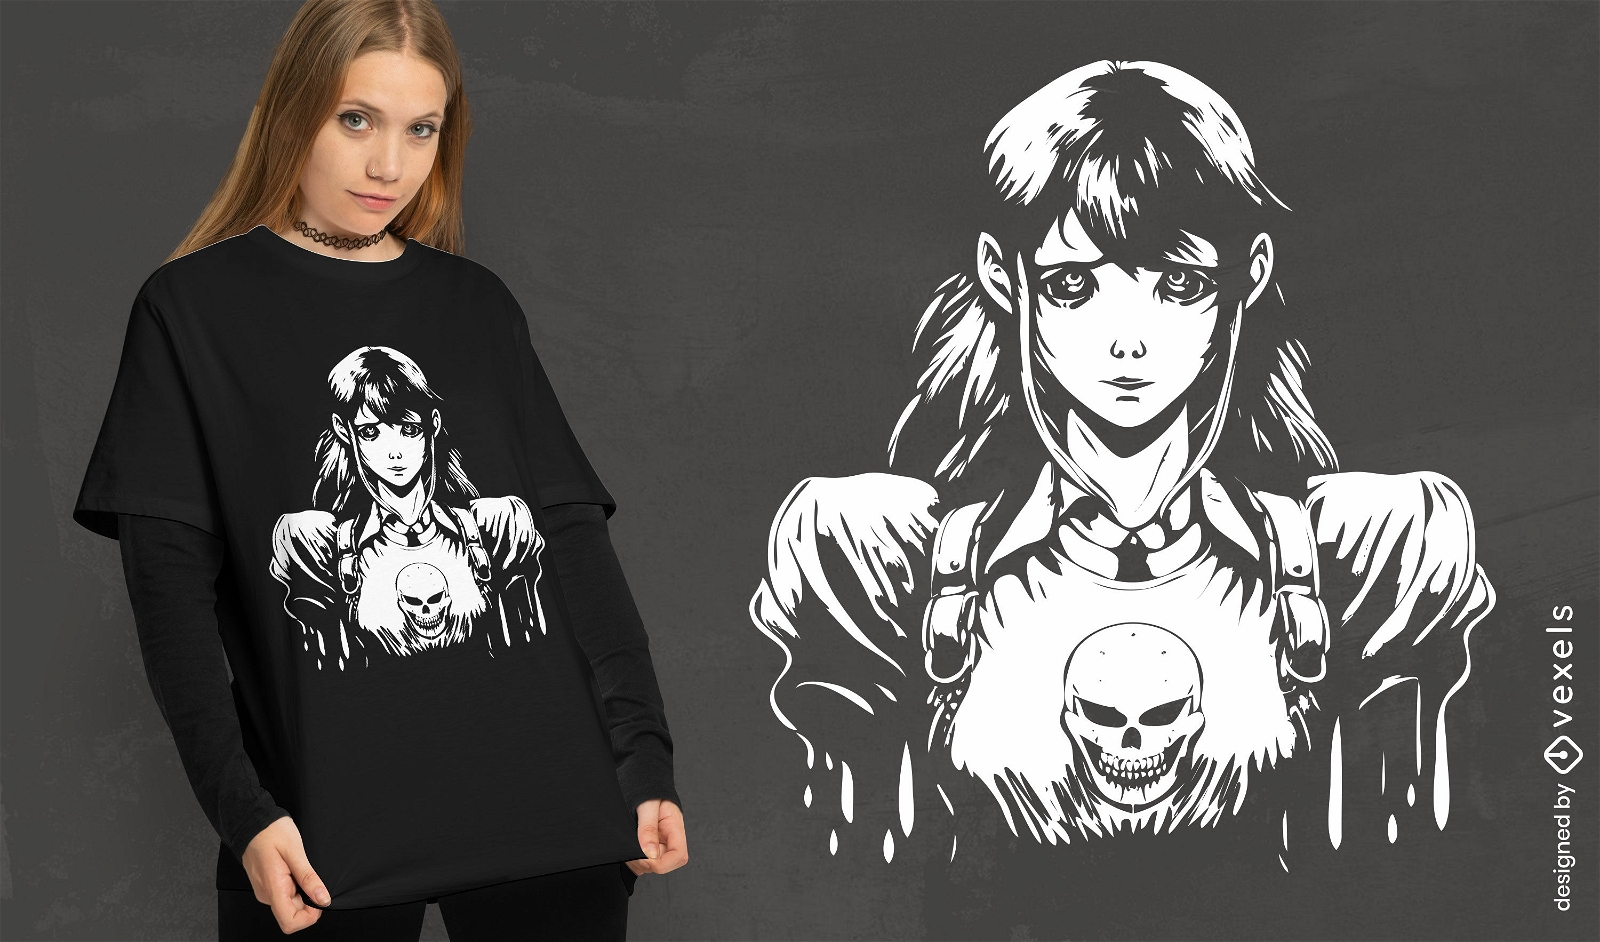 Anime nightmare girl t-shirt design